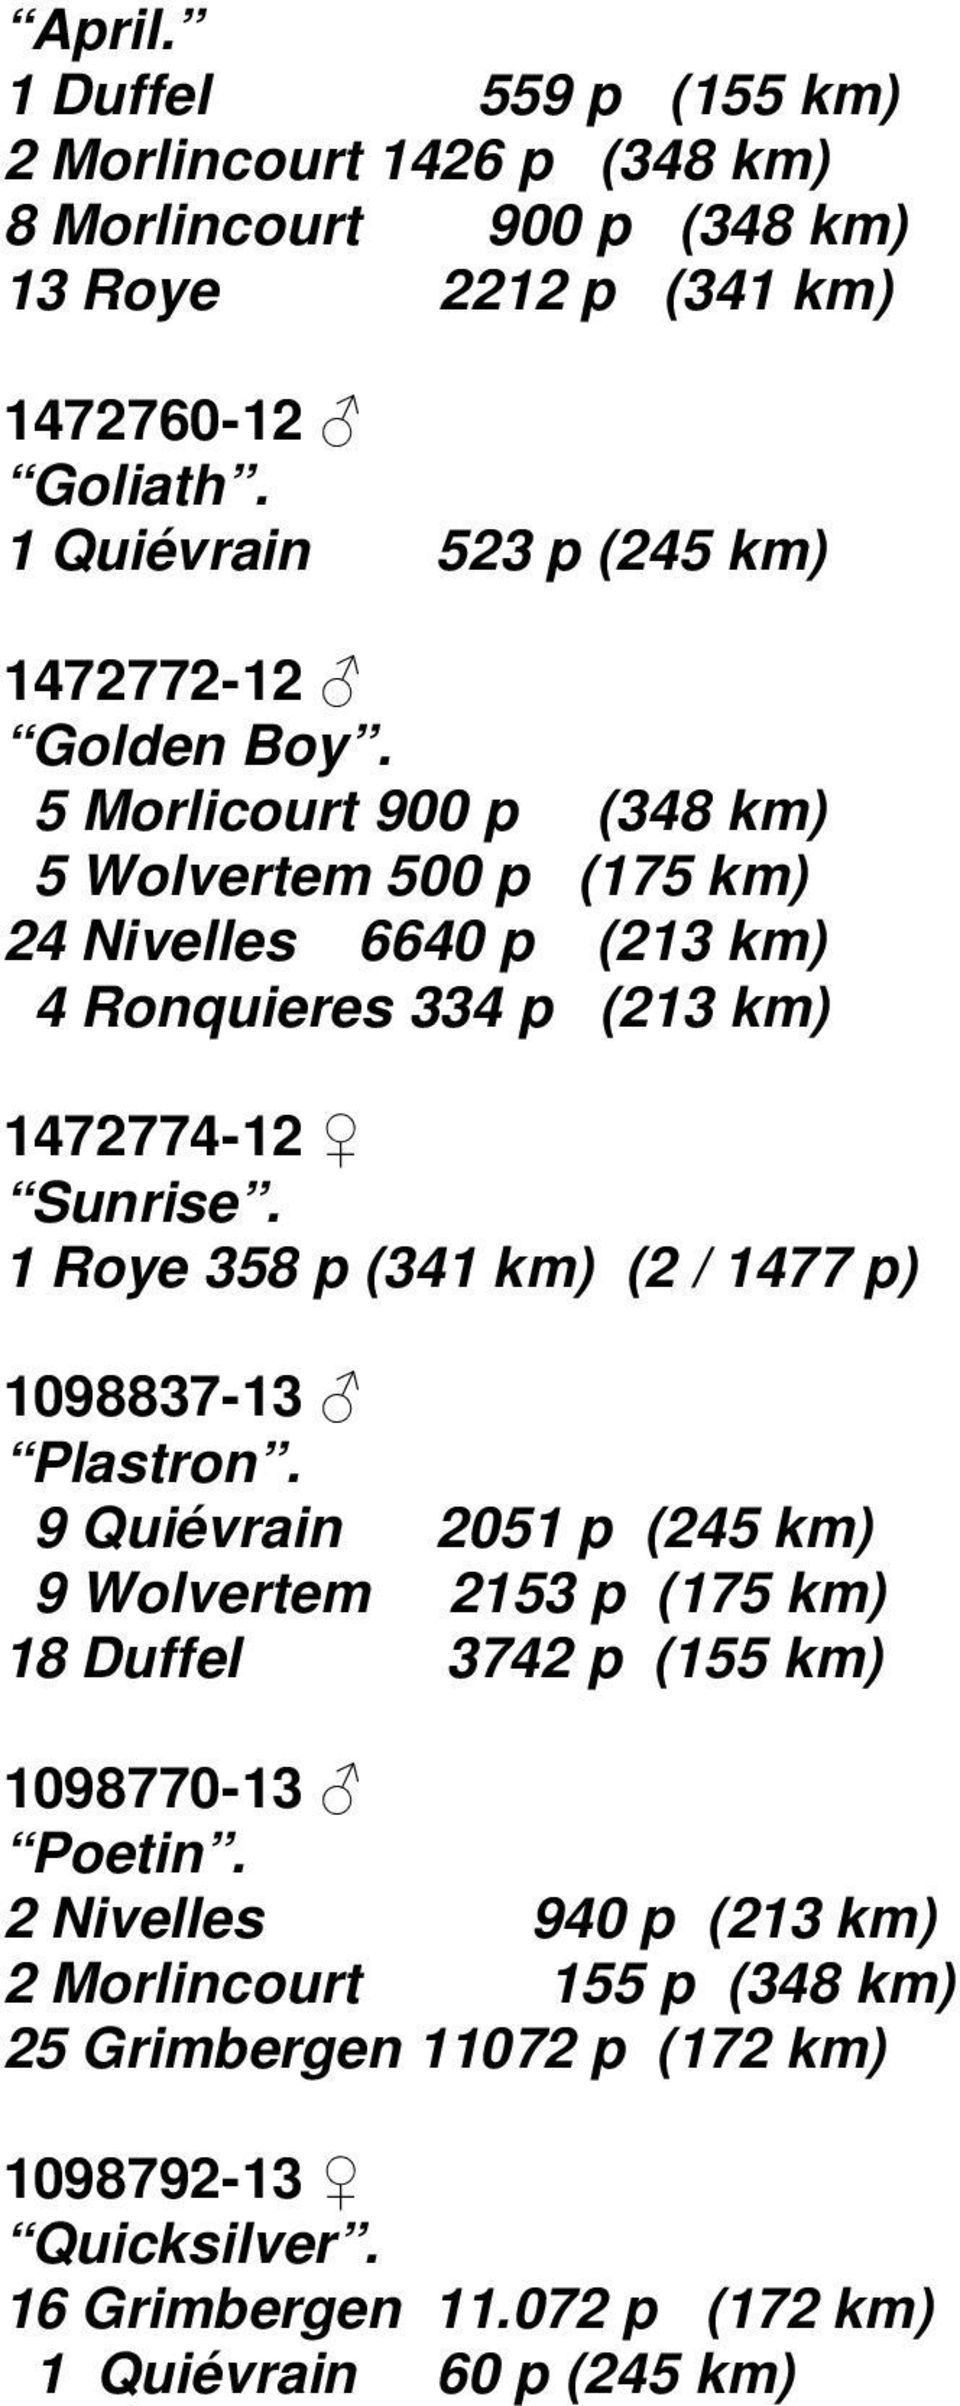 5 Morlicourt 900 p (348 km) 5 Wolvertem 500 p (175 km) 24 Nivelles 6640 p (213 km) 4 Ronquieres 334 p (213 km) 1472774-12 Sunrise.